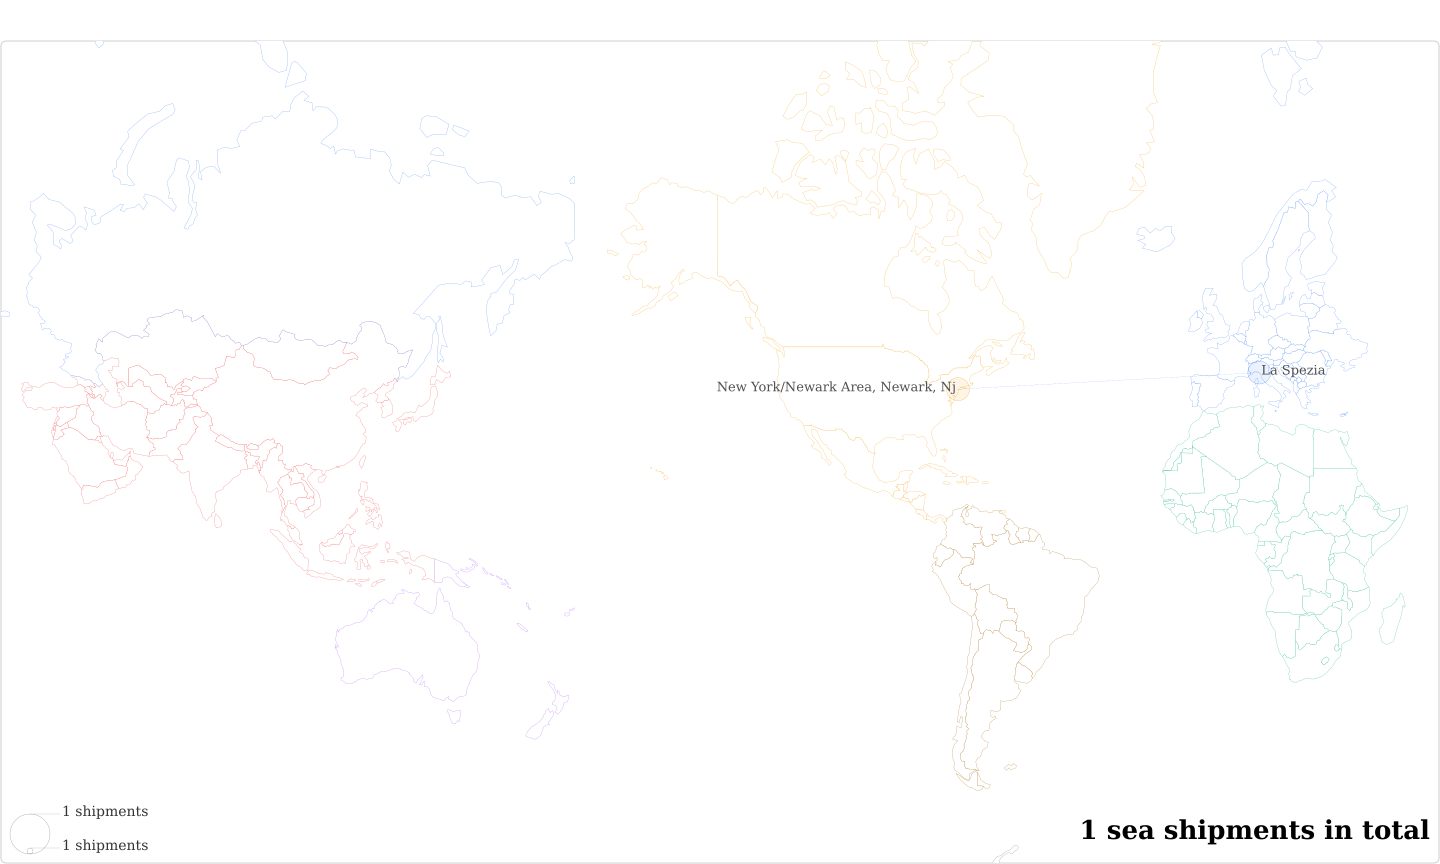 Quaranta Caffe's Imports Per Country Map